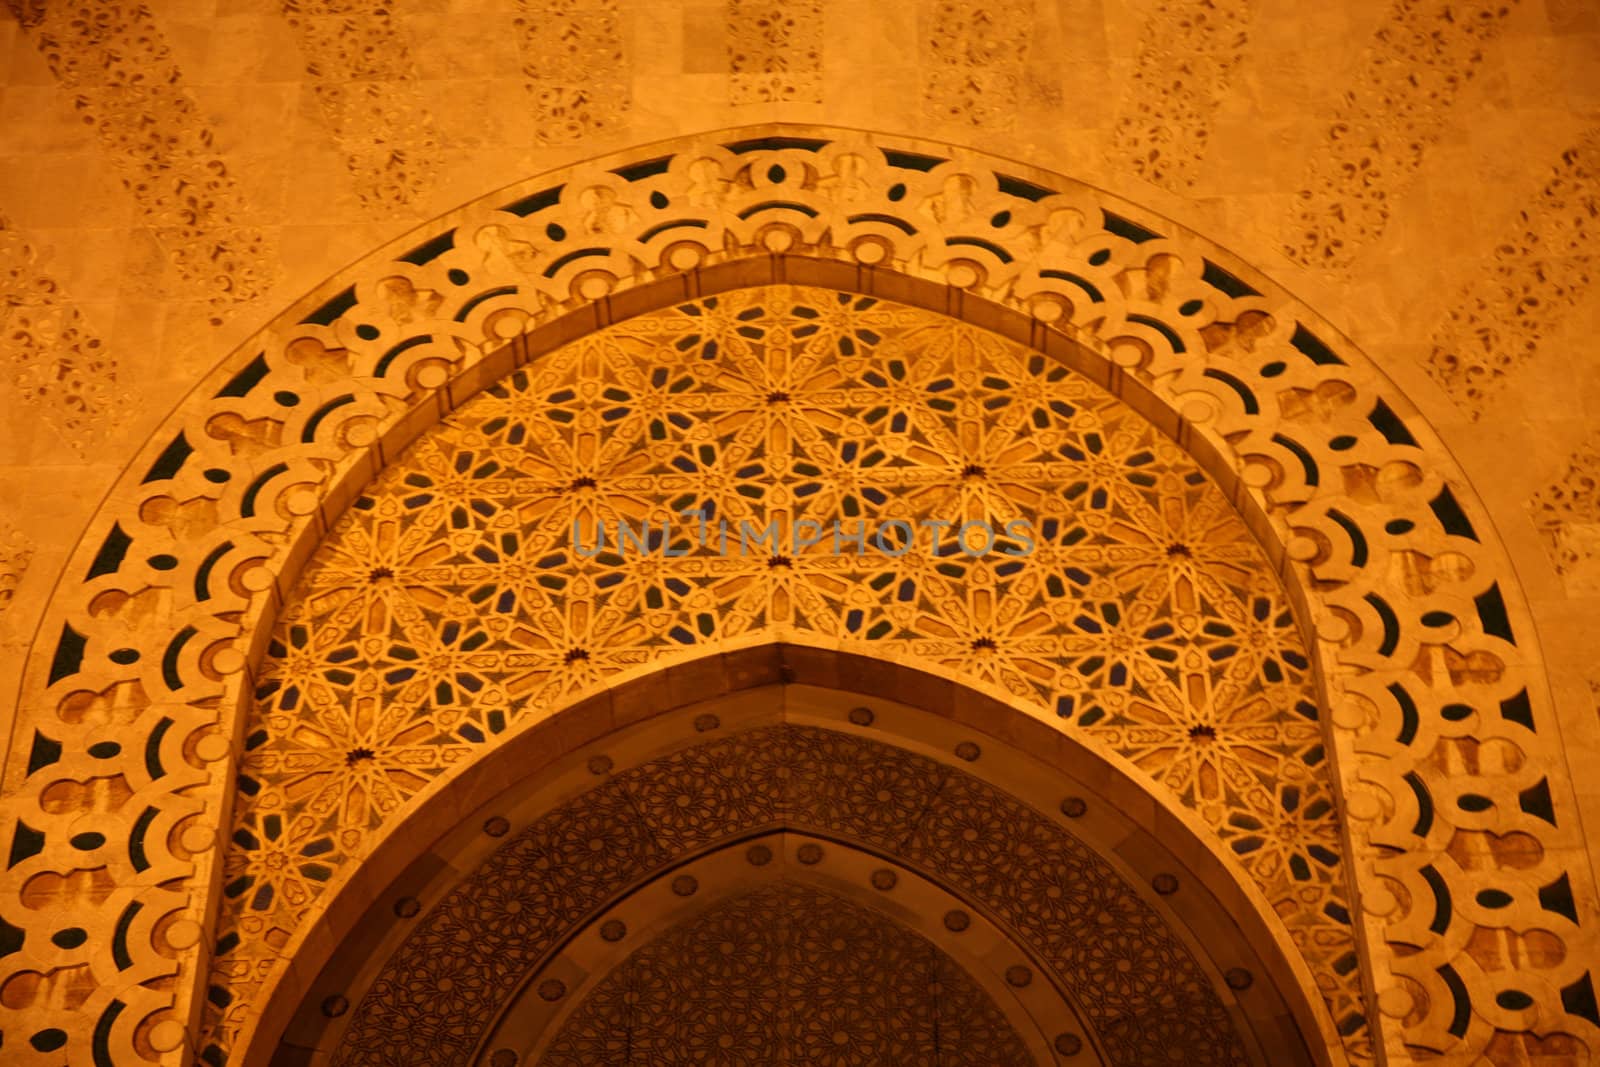 Mosque Hassan II in Casablanca - Morocco